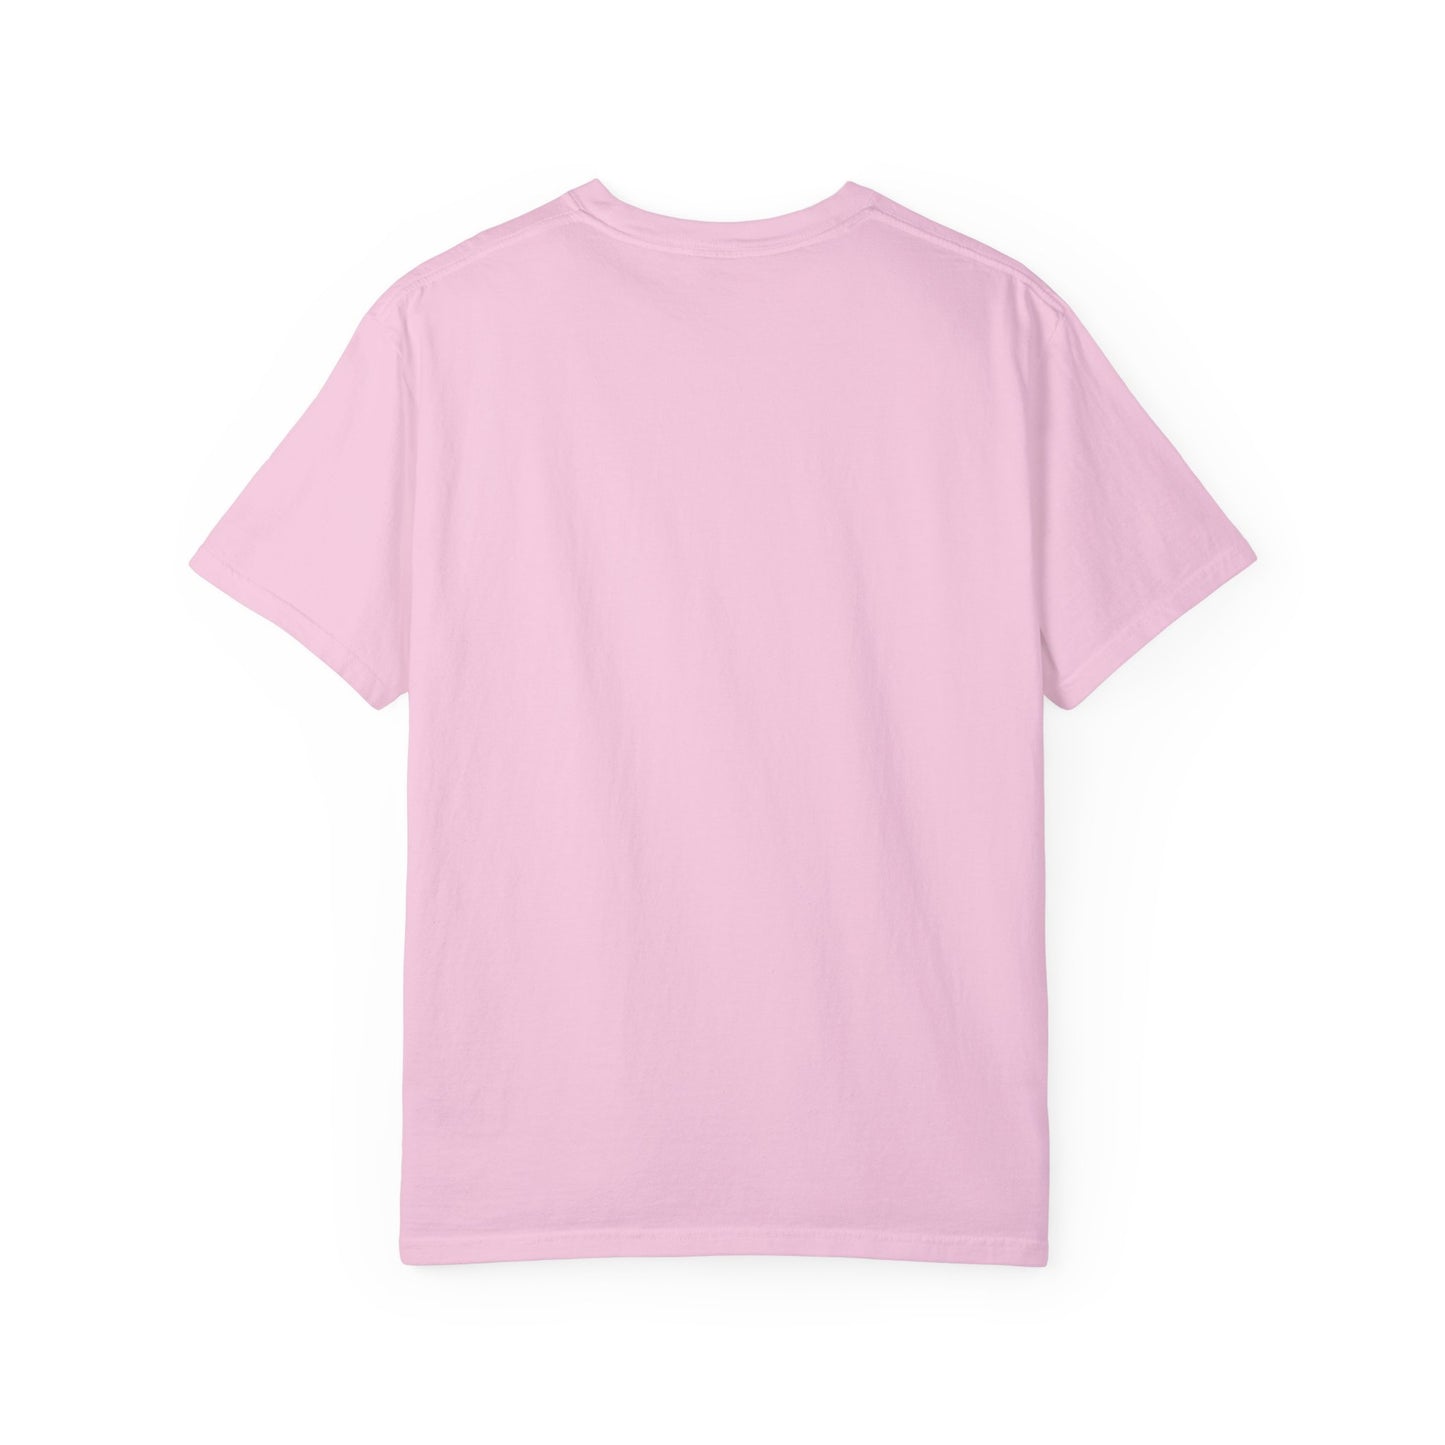 Traverse City Soup Can Unisex Garment-Dyed T-shirt